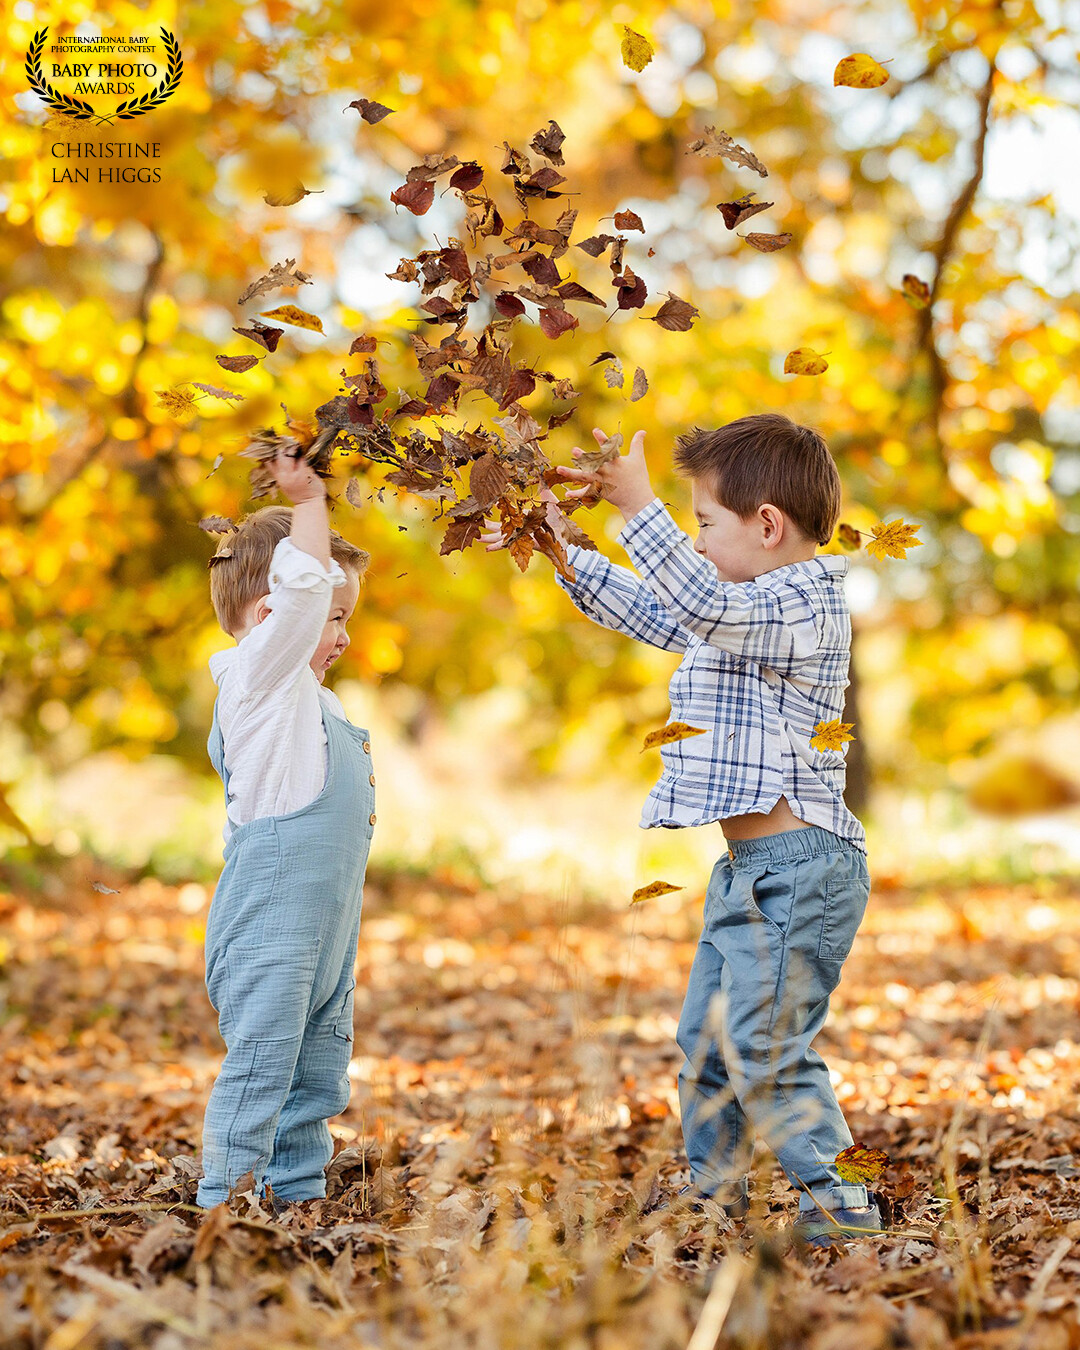 Boys gleefully tossing leaves, creating a lively burst of autumn joy.